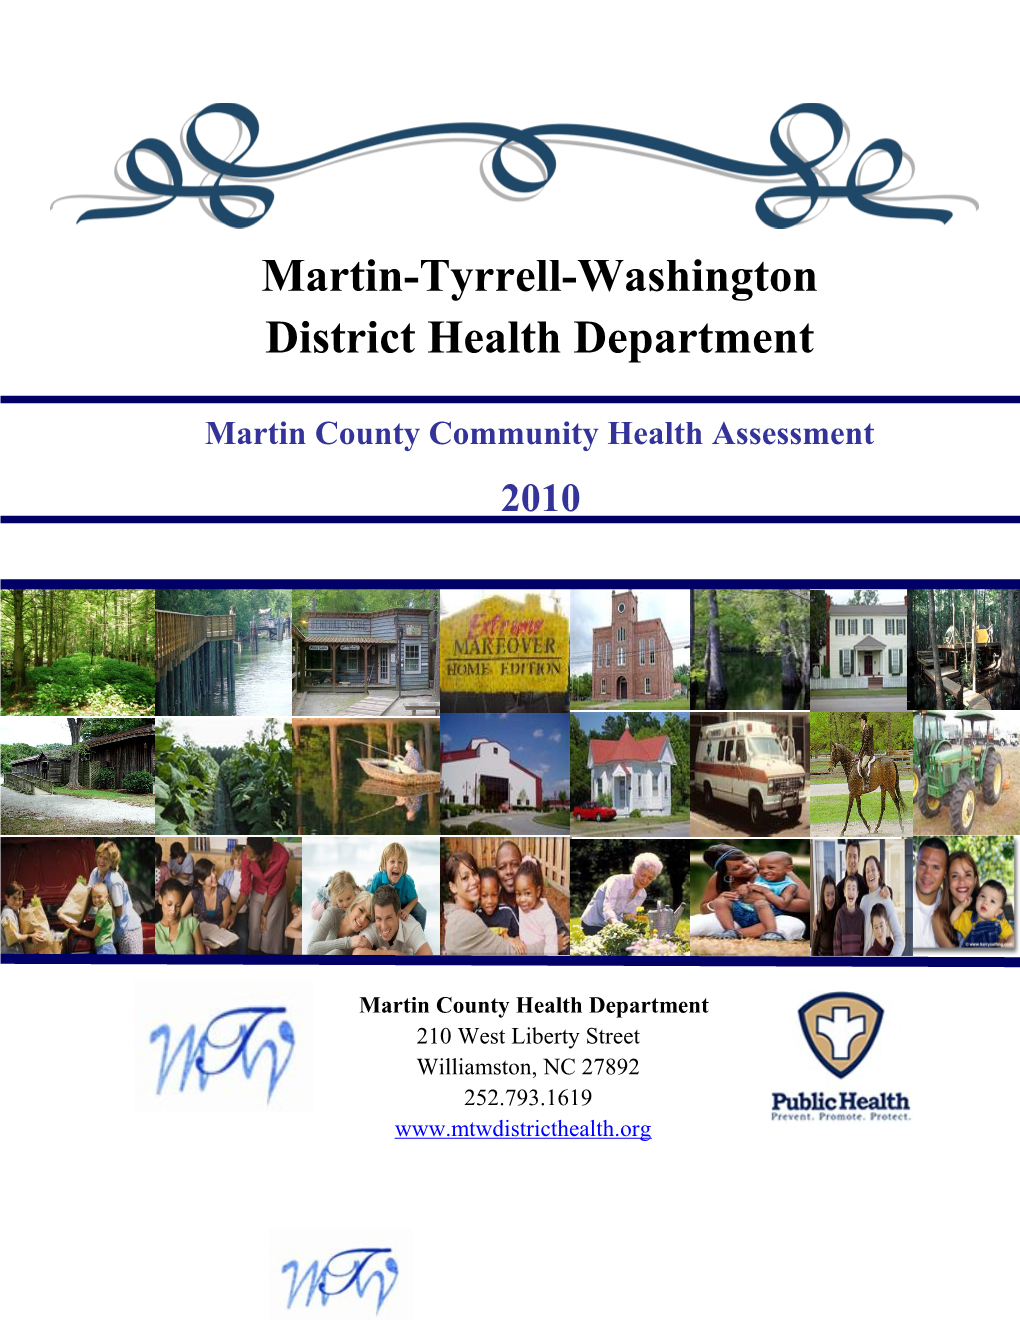 District Health Department